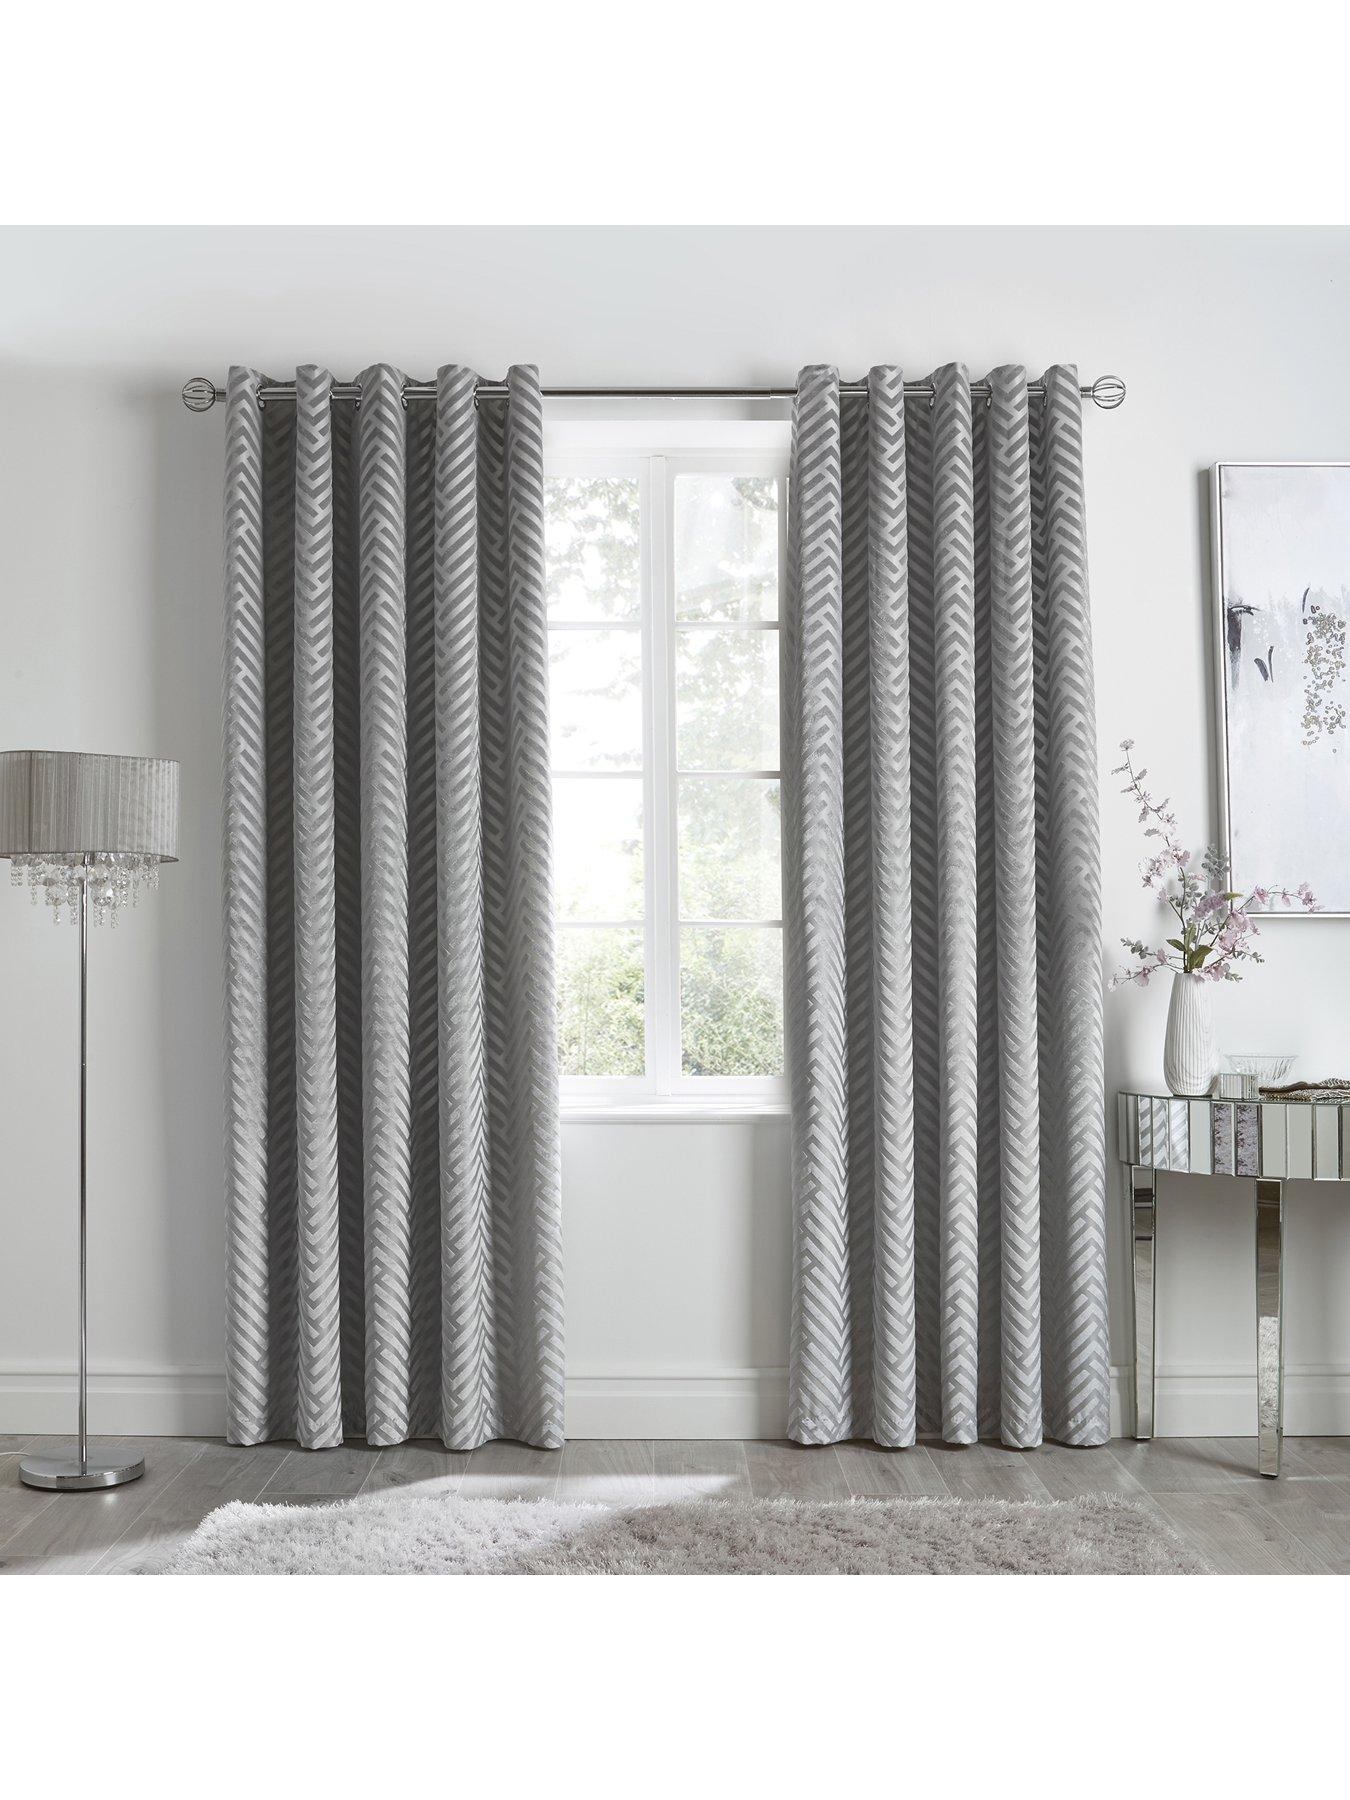 Intimates Riva Plain Woven Slot Top Voile Curtain Panel Cream, 59 W x 48 D